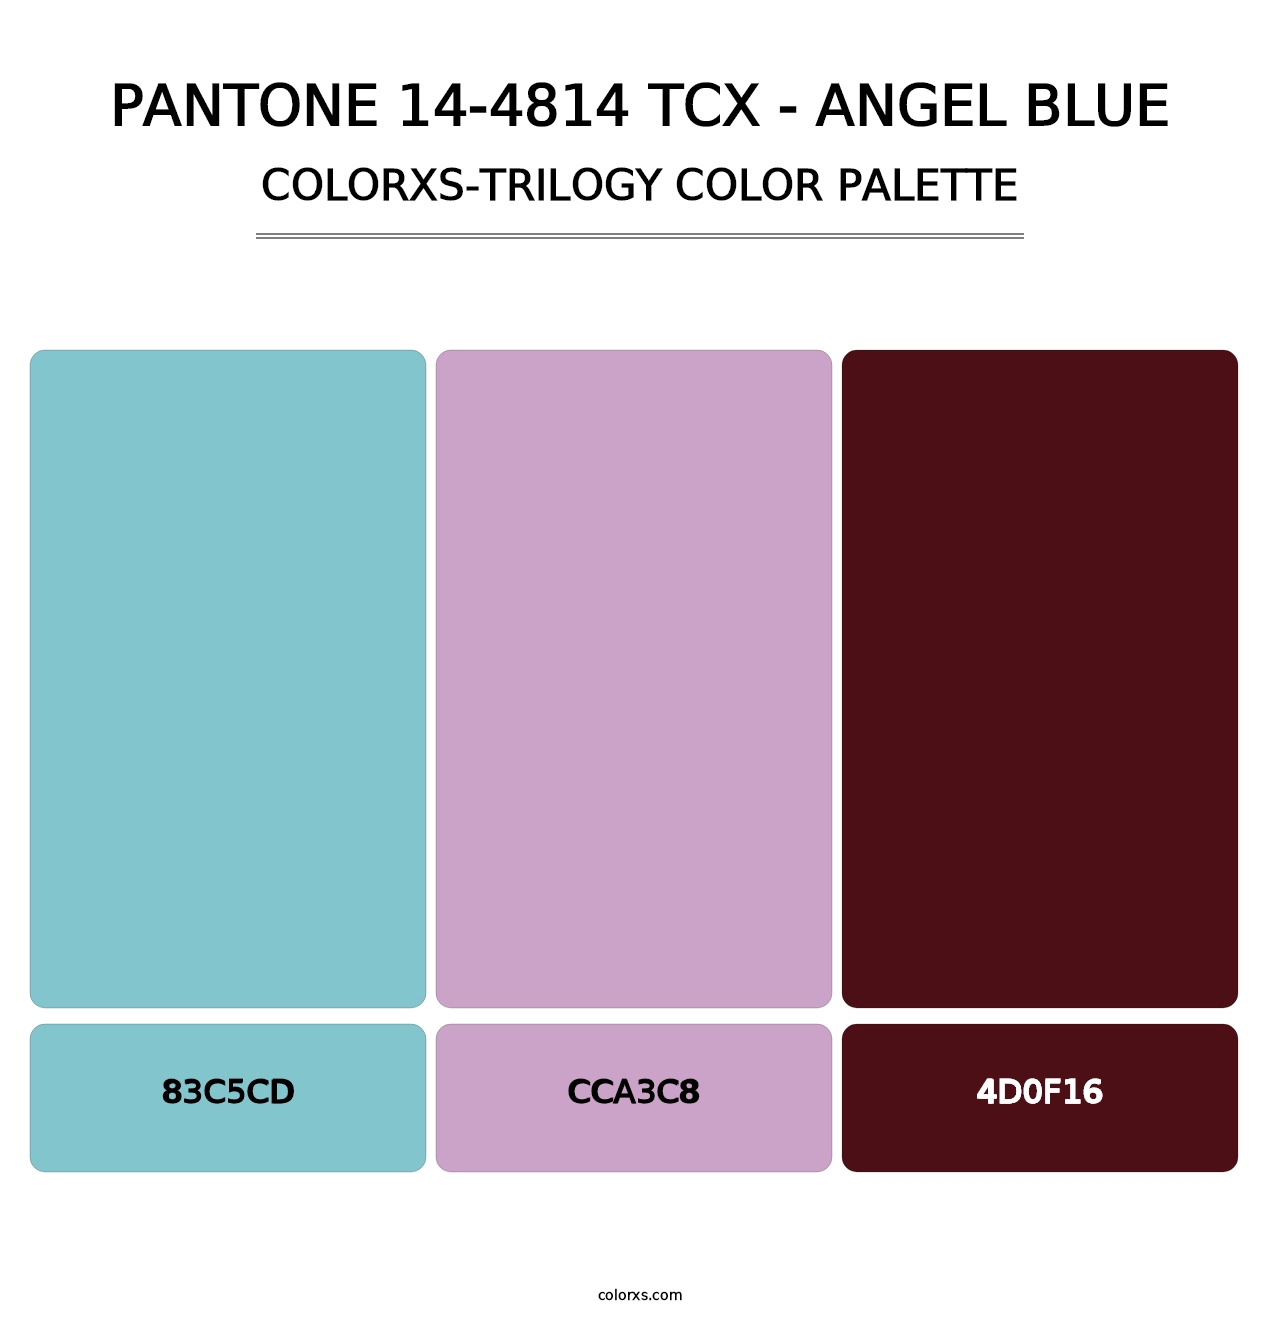 PANTONE 14-4814 TCX - Angel Blue - Colorxs Trilogy Palette